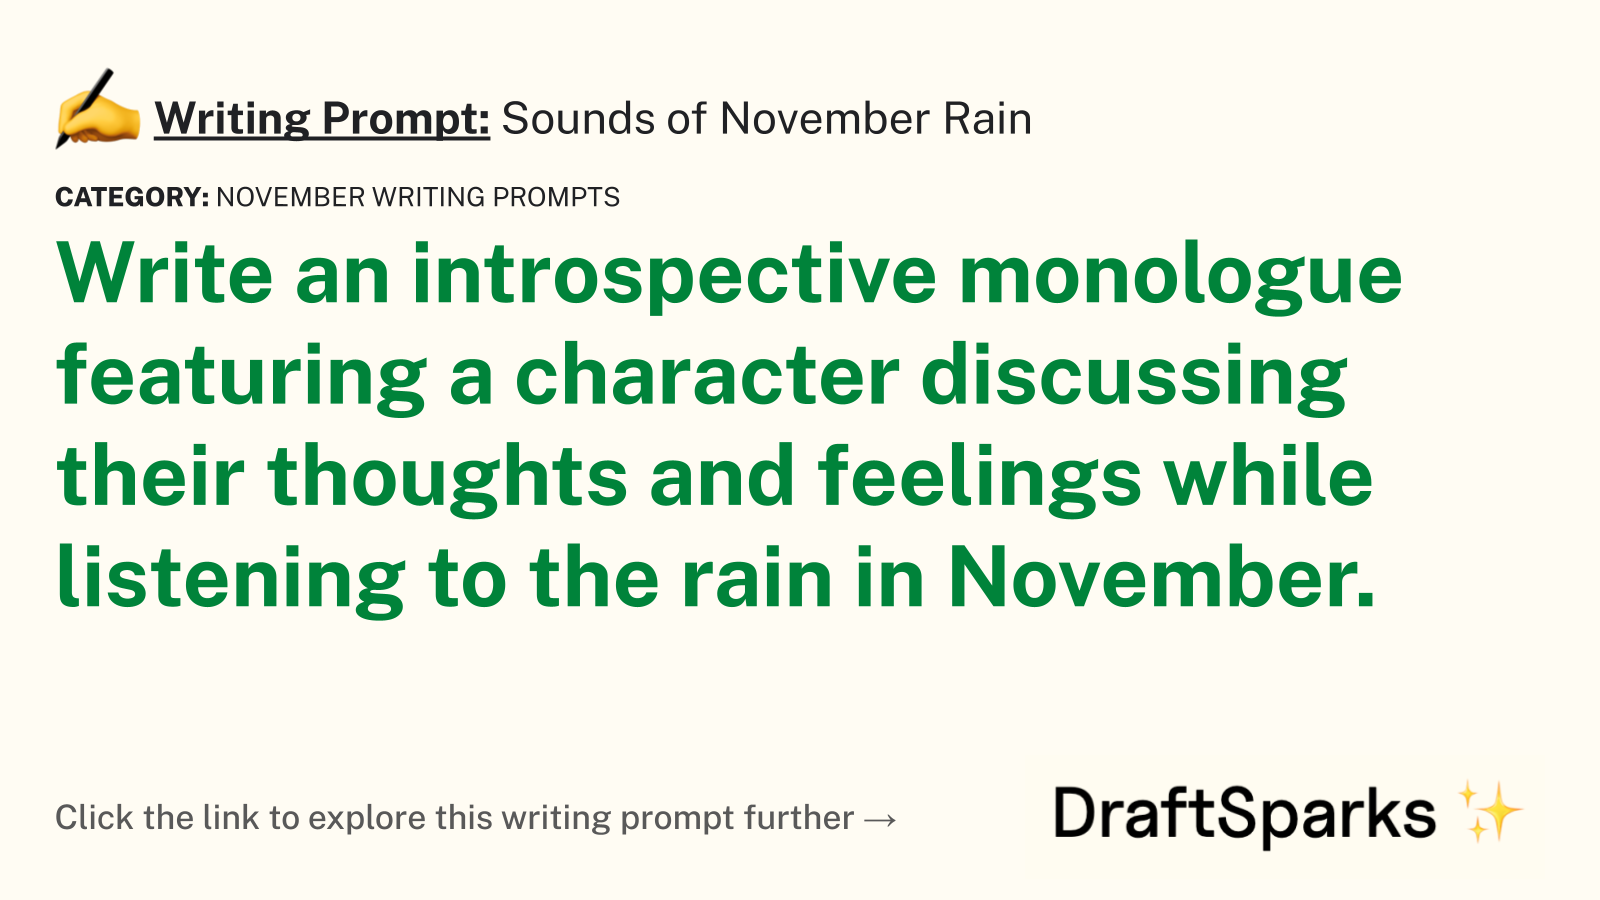 Sounds of November Rain